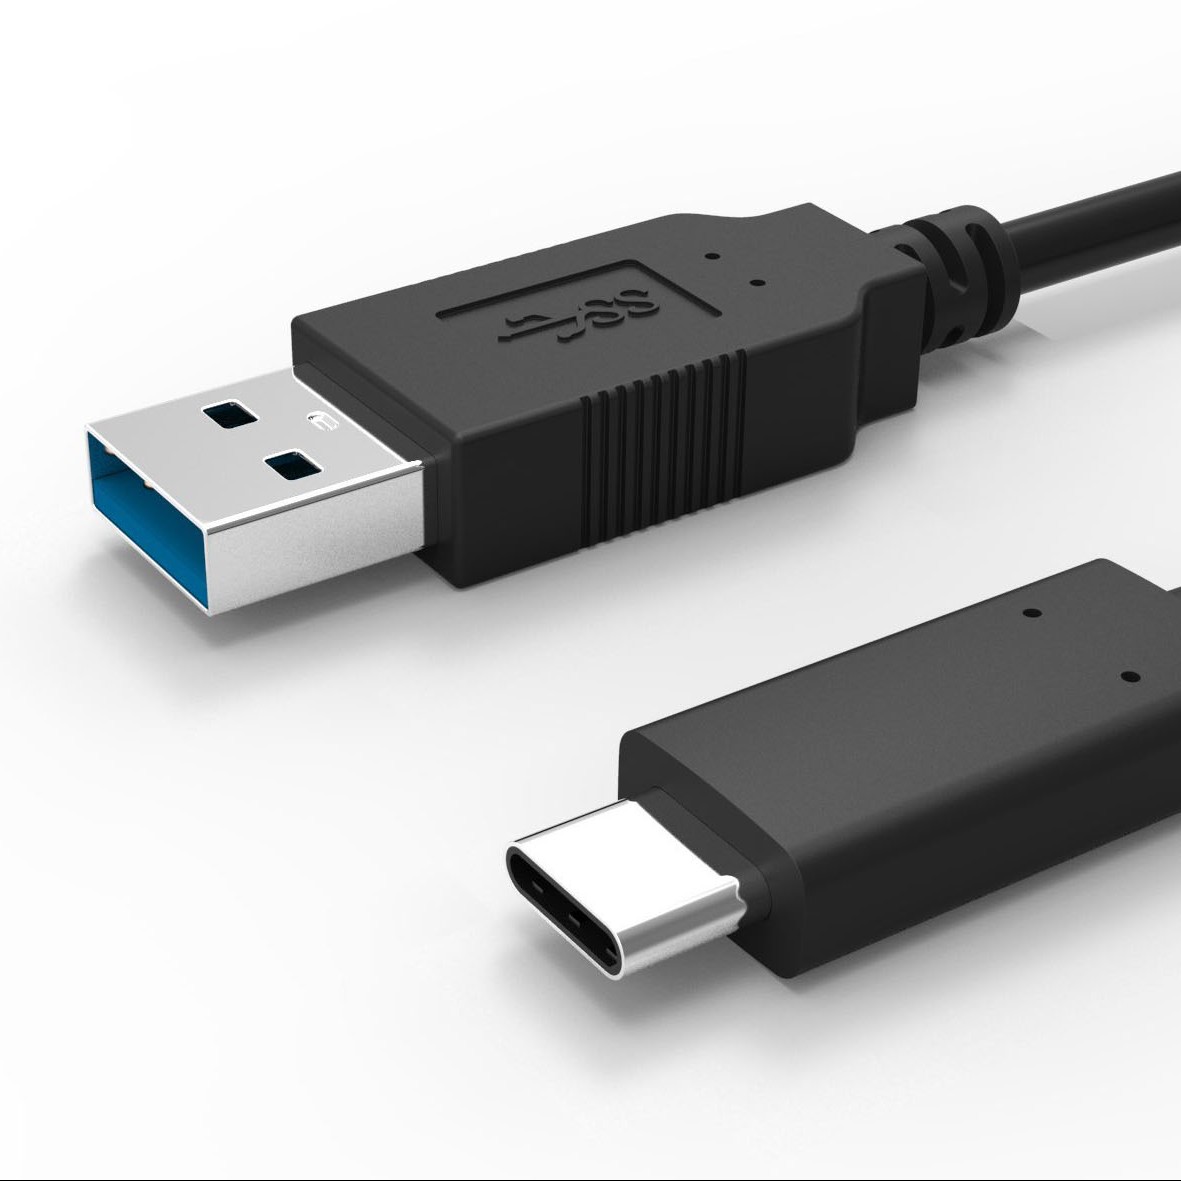 Tpc кабель. Кабель USB 3 0 на тайп си. USB Type-c кабель USB 3.1. Type b USB Cable. Кабель USB 3.0 Type-c 3a fast charge.